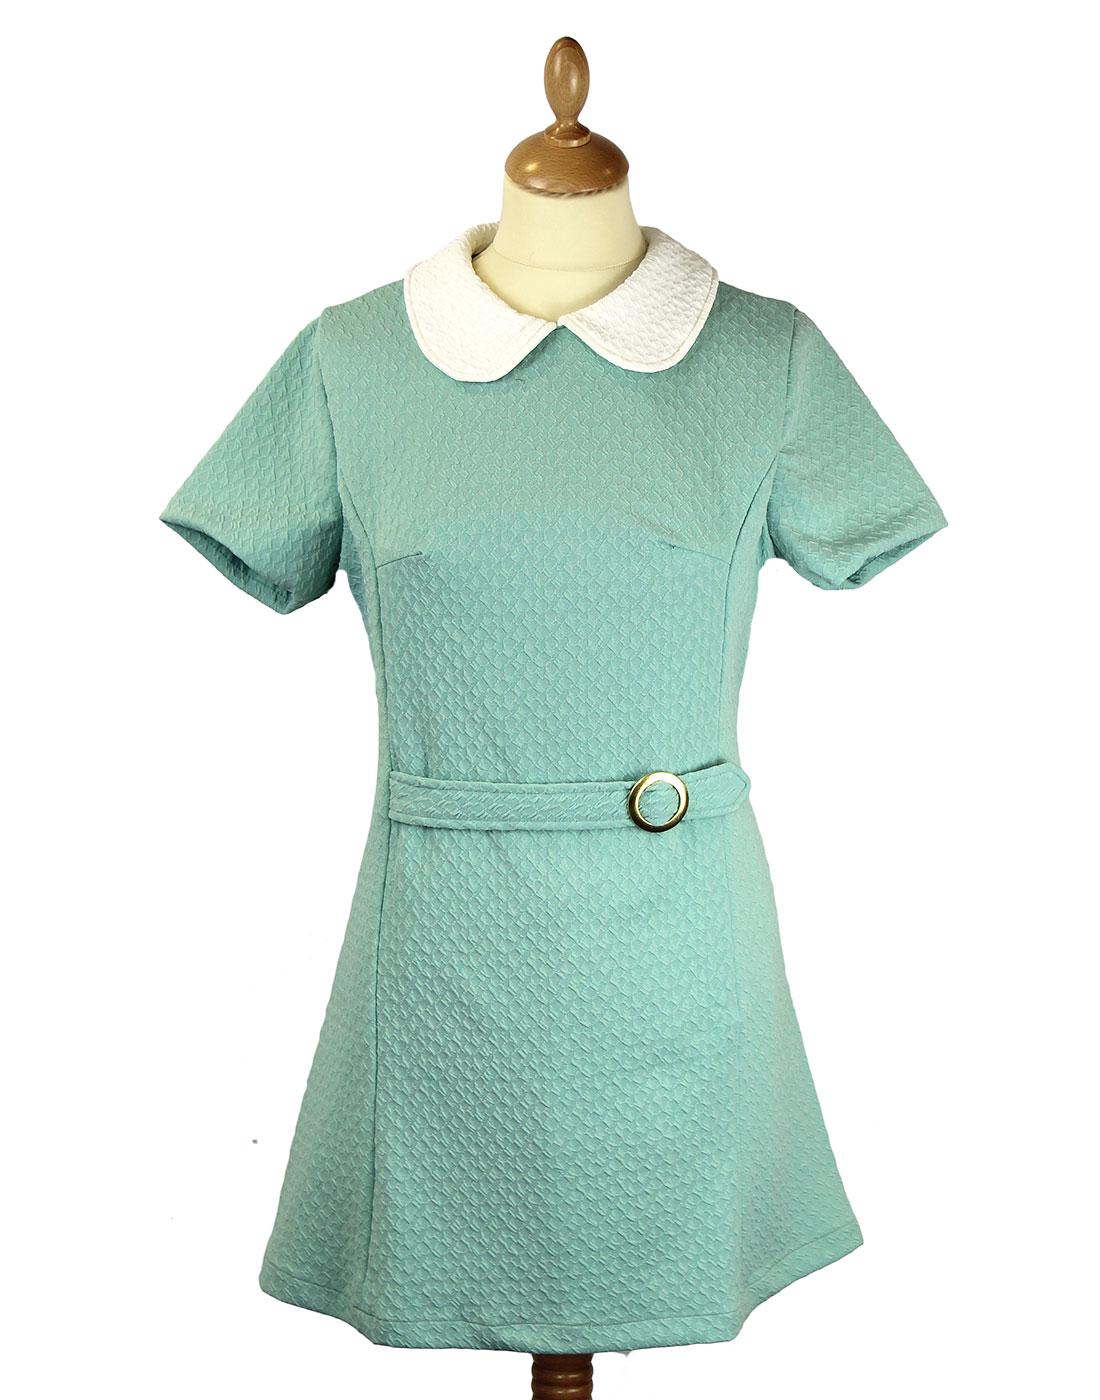 Sally Retro 1960s Mod Texture Dress in Mint